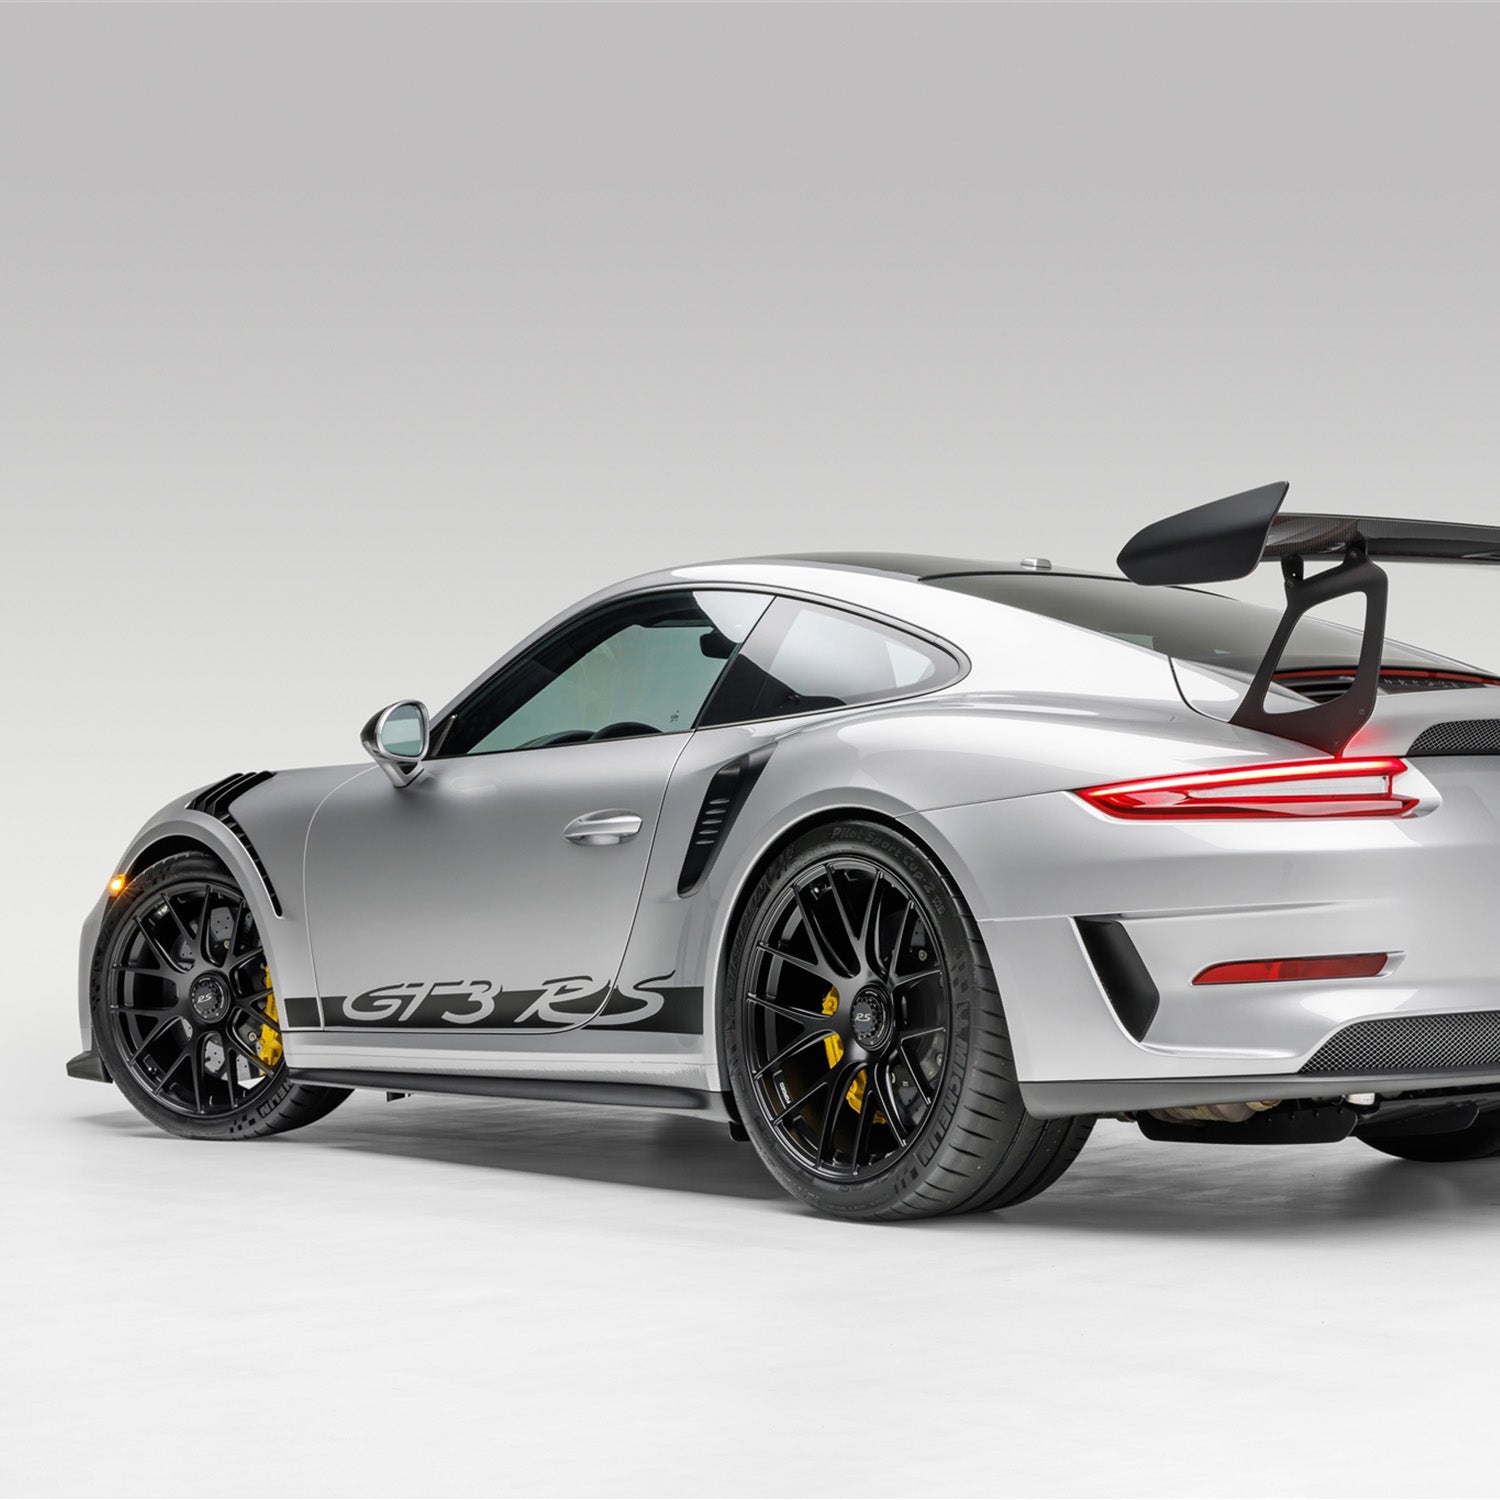 Titan 7 T-S7 Forged 7Y Spoke Alloy Wheels Porsche 911 GT3 - Machine Black